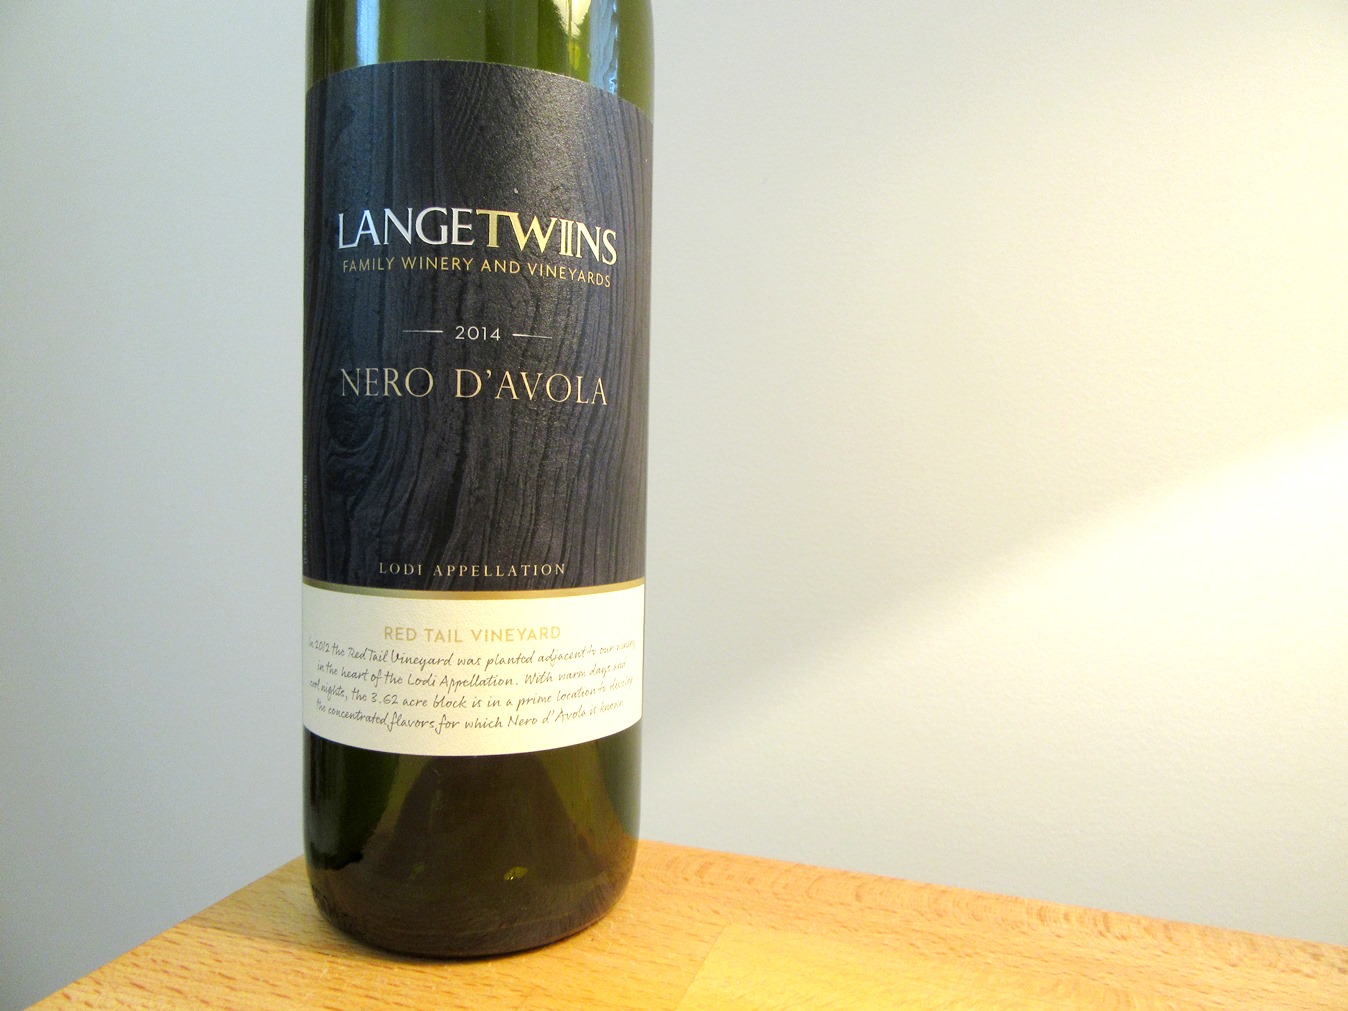 Lange Twins Family Winery and Vineyards, Nero D’Avola 0214, Red Tail Vineyard, Lodi, California, Wine Casual